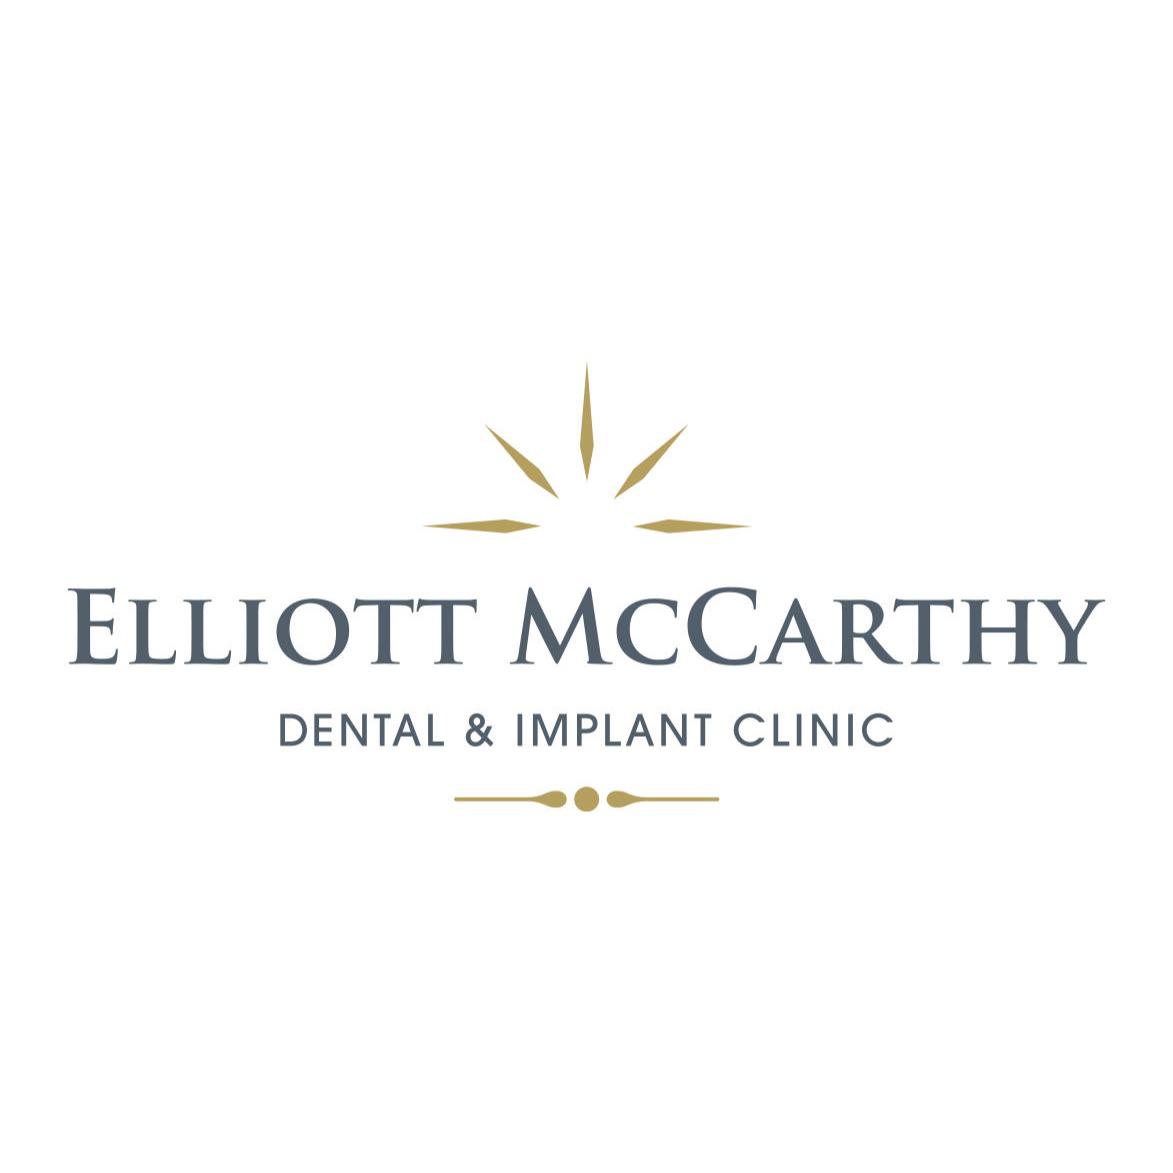 Elliott McCarthy Dental and Implant Clinic - Hartlepool, North Yorkshire TS26 0TB - 01429 863356 | ShowMeLocal.com